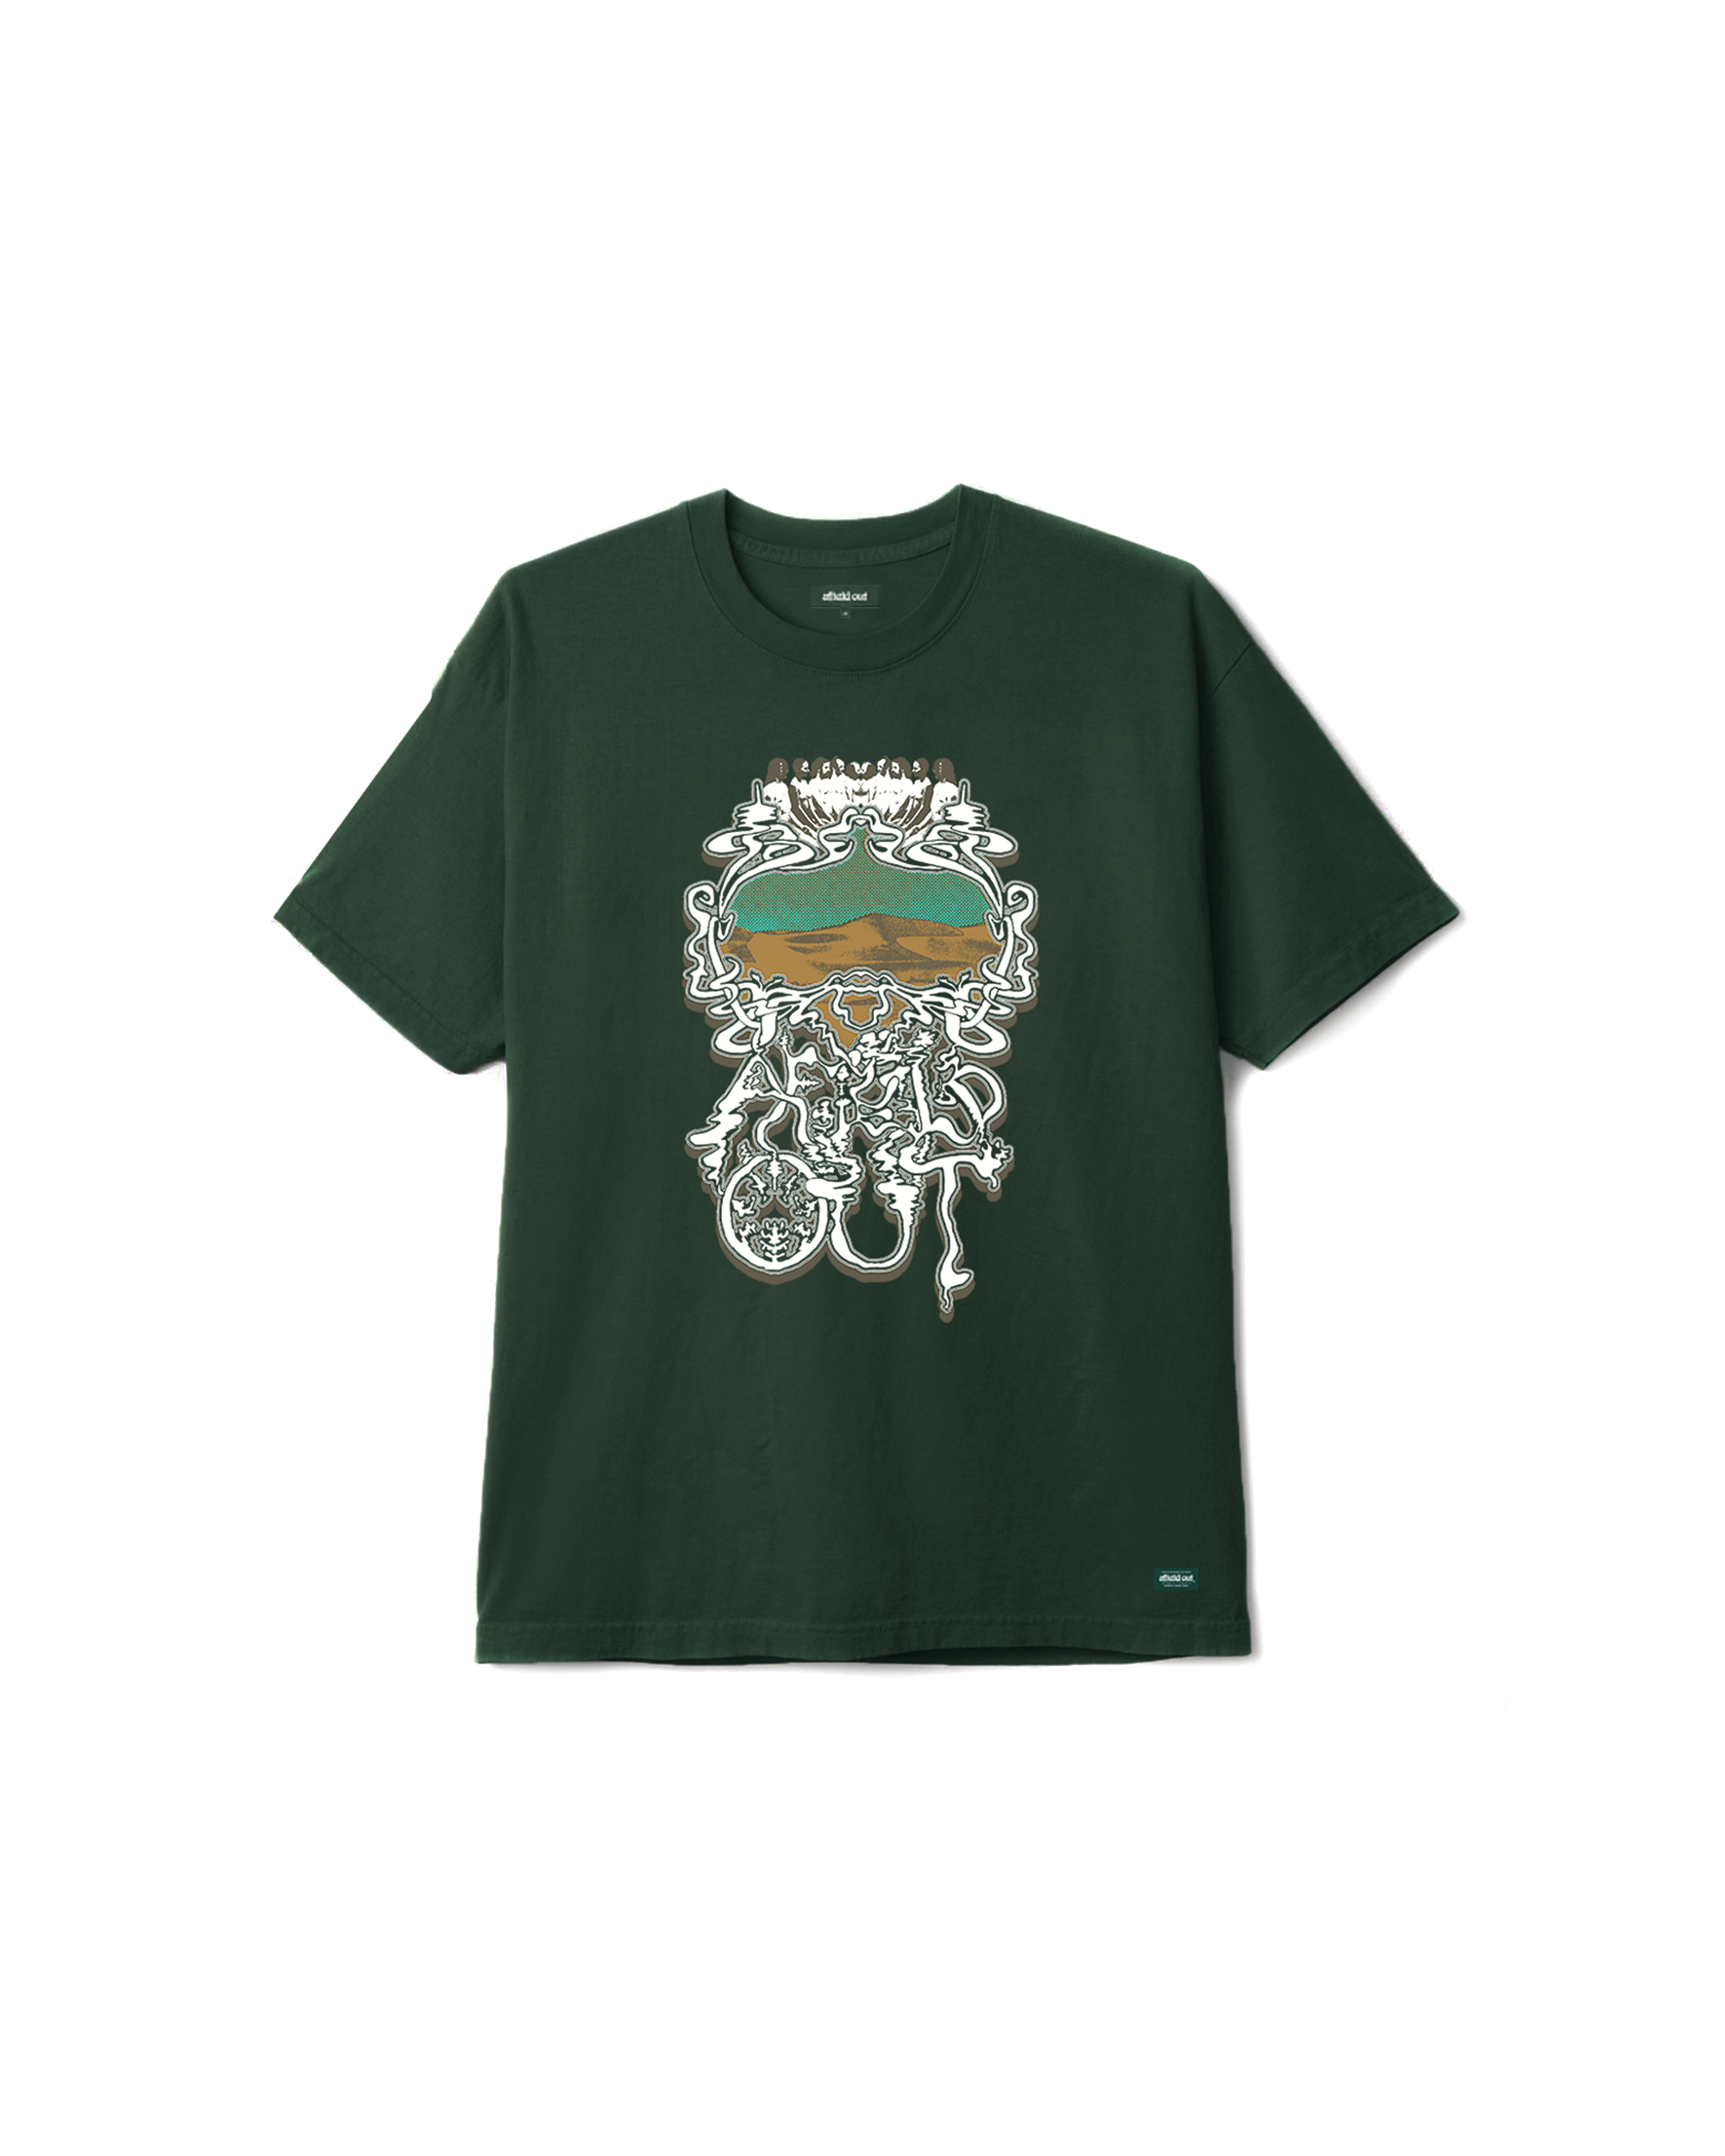 Range T-Shirt - Green